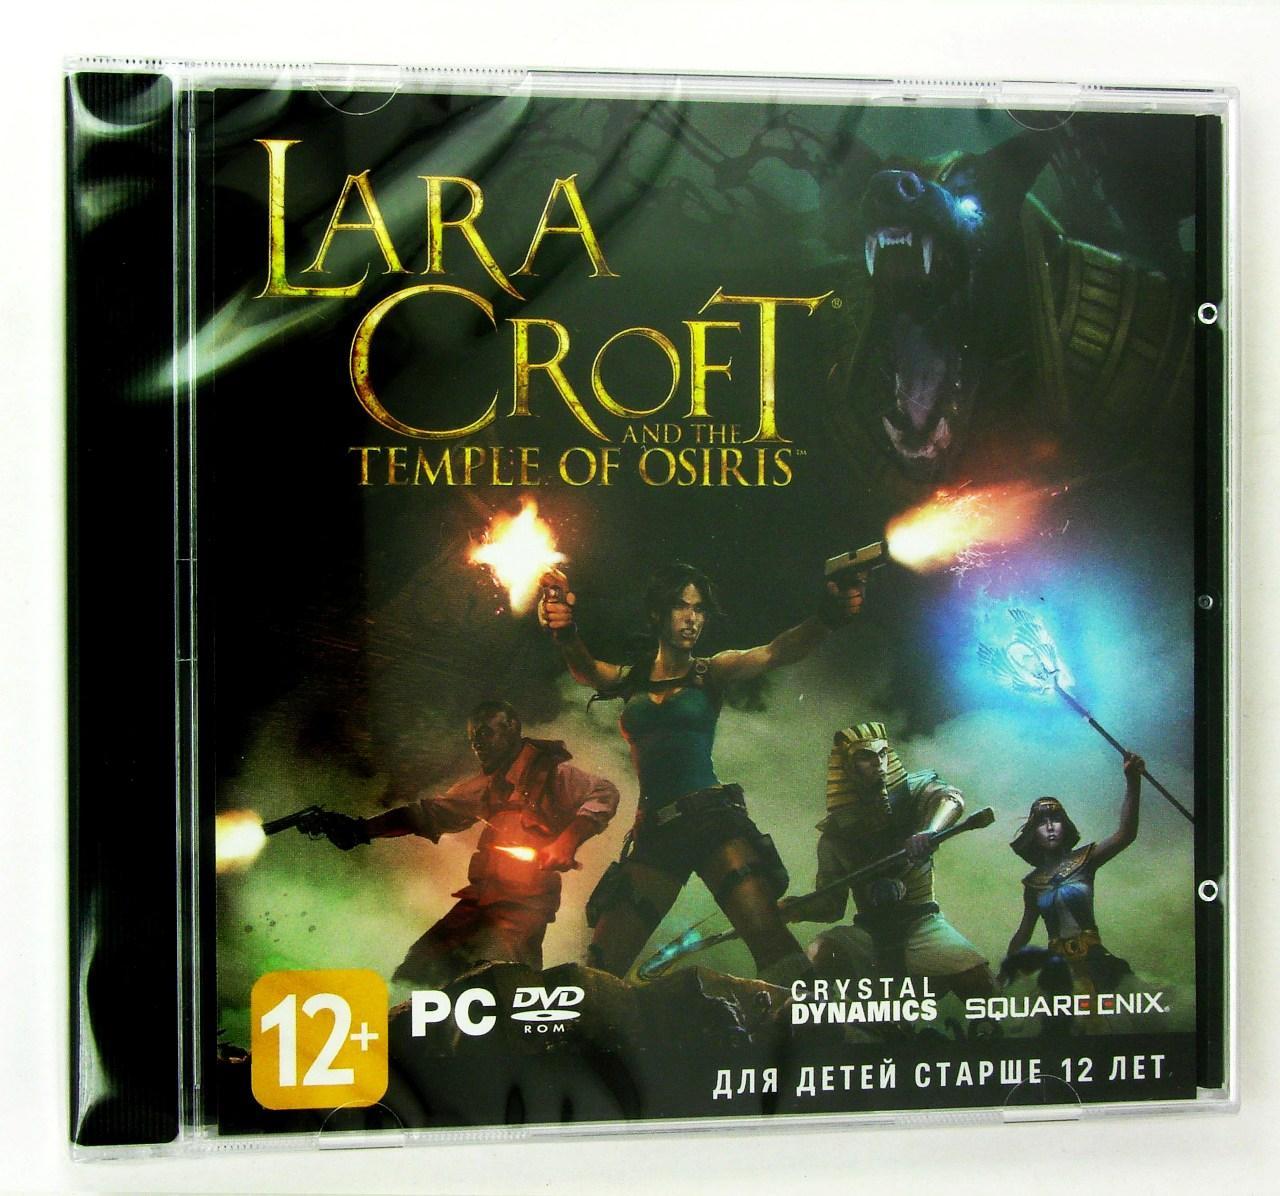 Компьютерный компакт-диск Lara Croft and the Temple of Osiris (PC), фирма "Бука", DVD